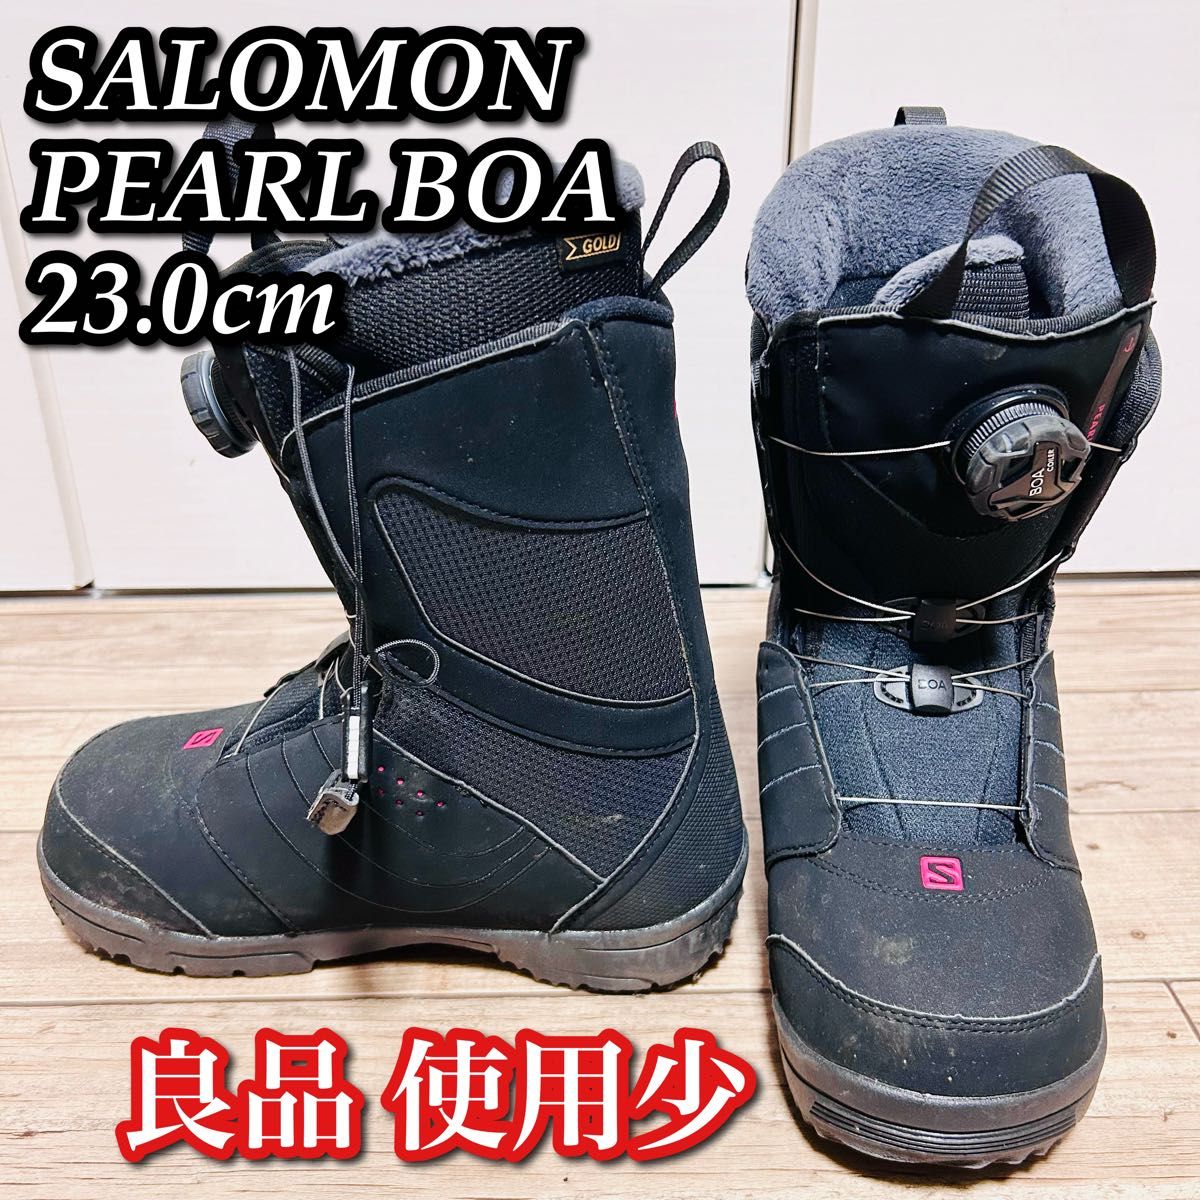 【BOA】SALOMON Pearl スノーボードブーツ 23.0cm